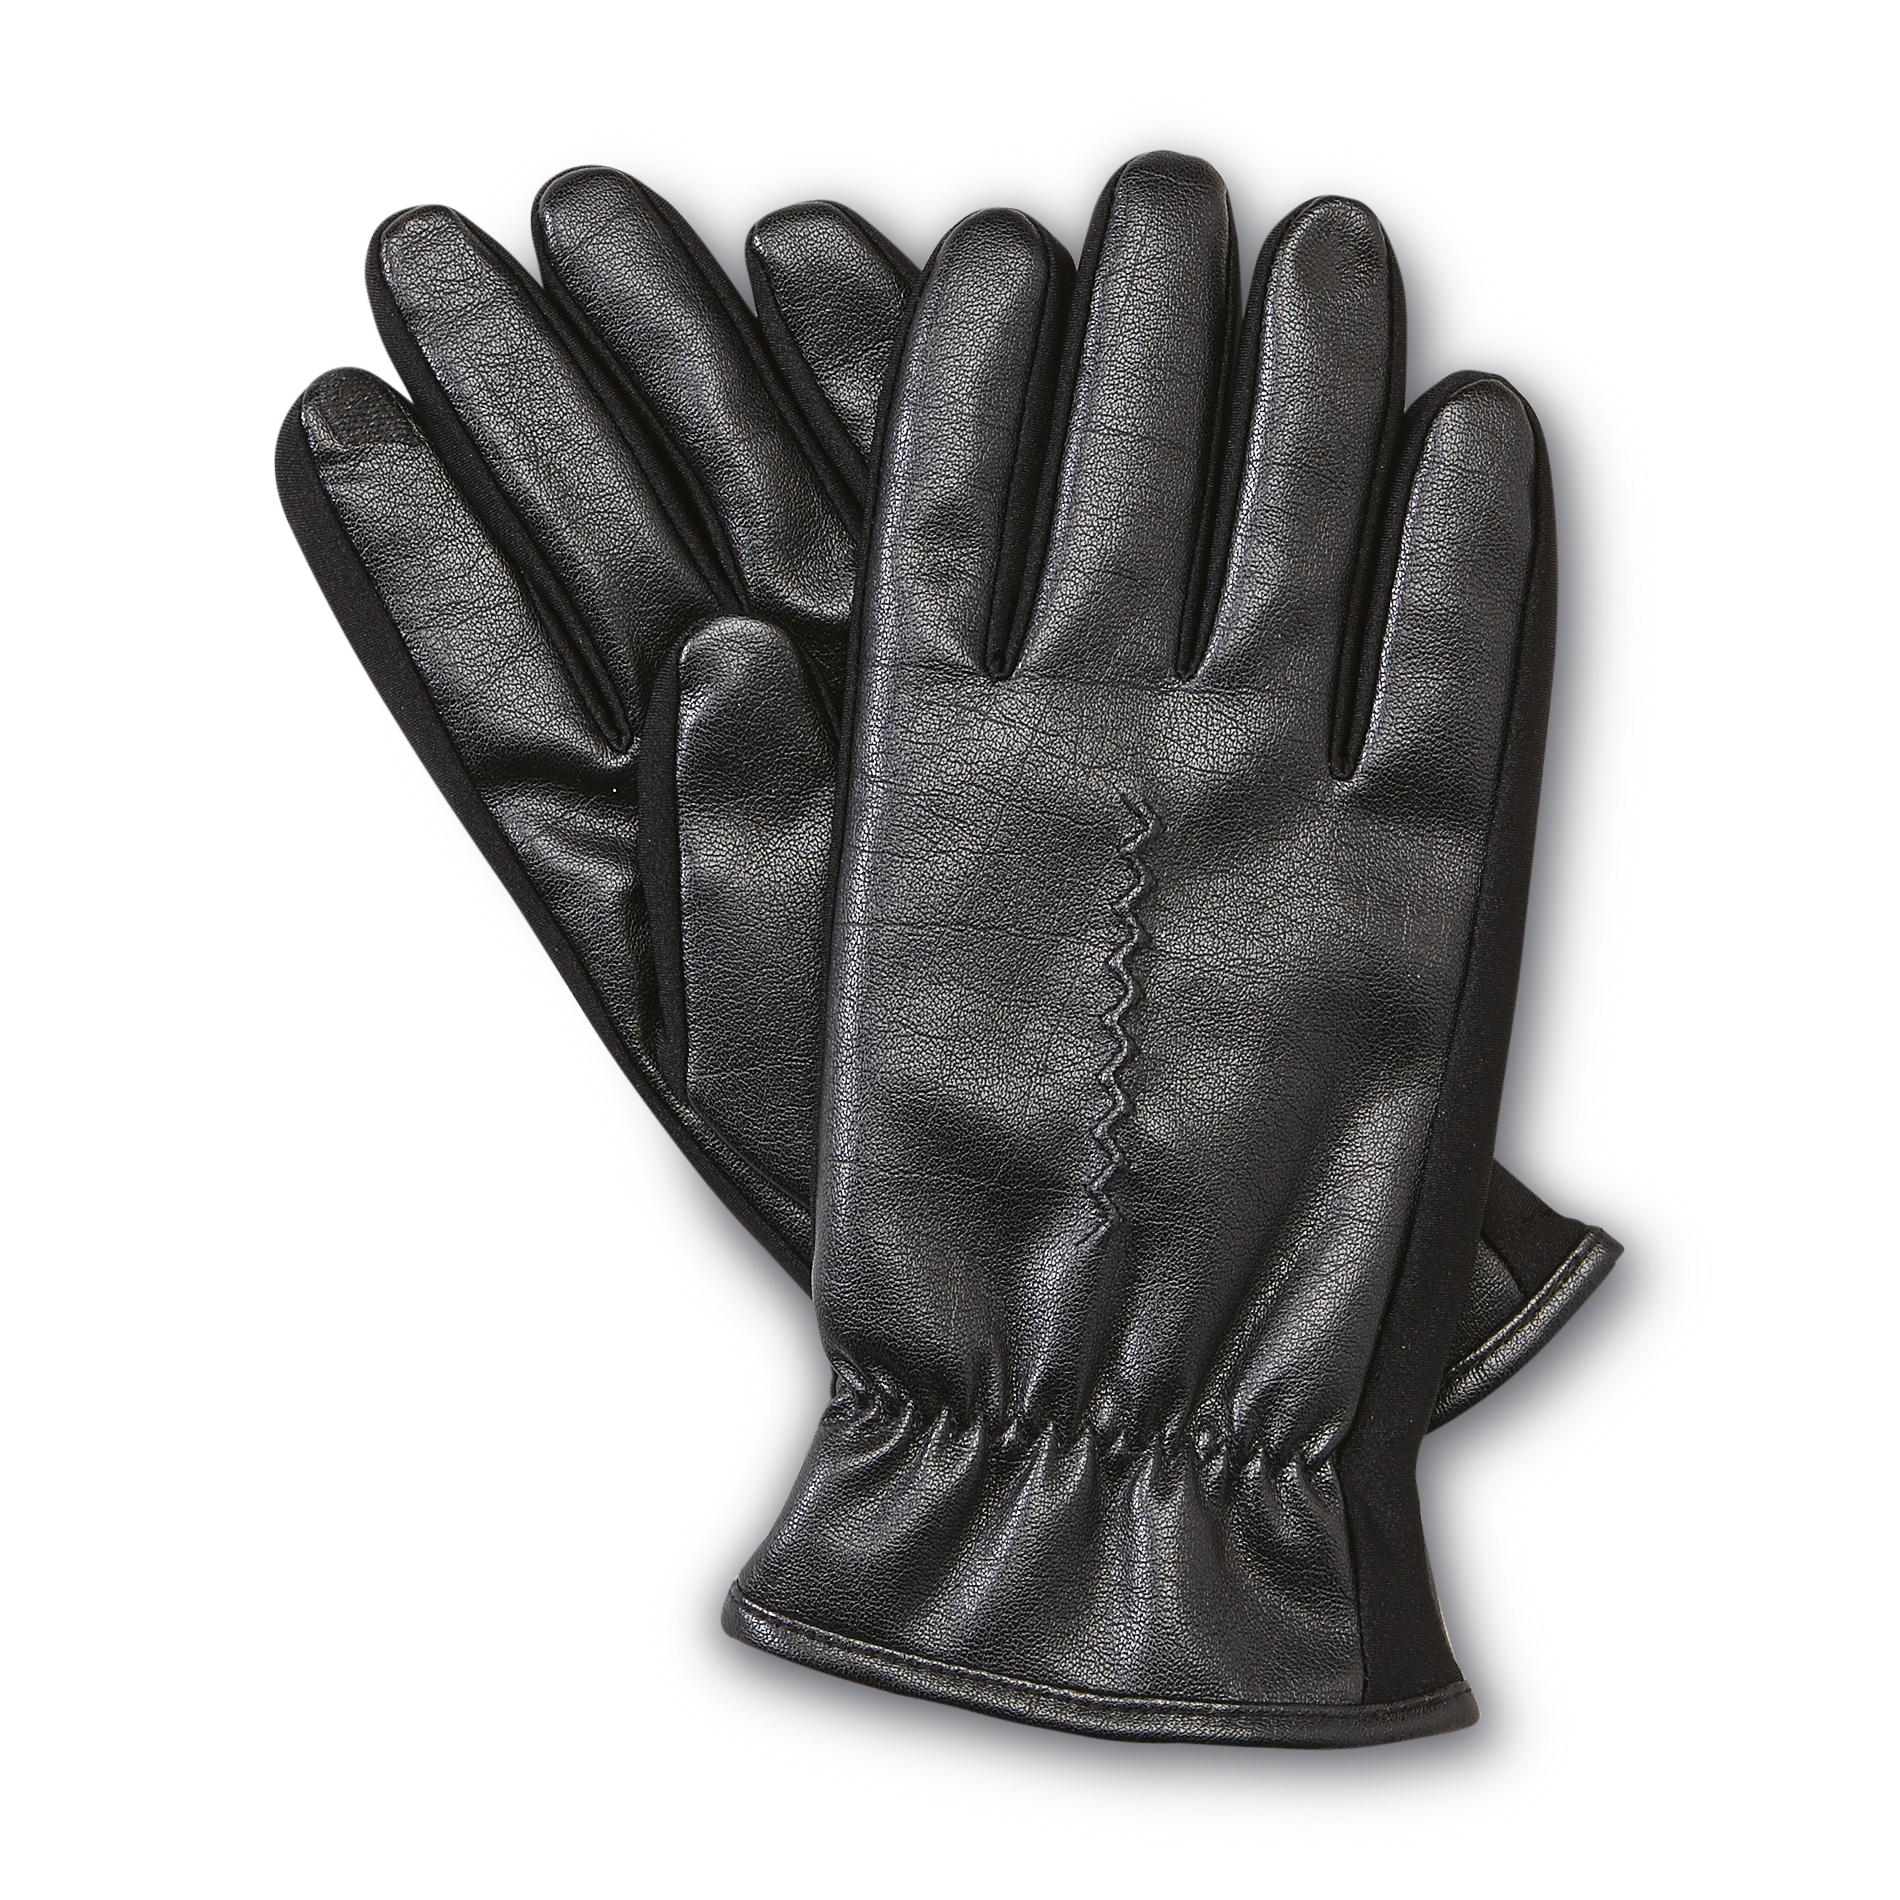 Isotoner Men's SmarTouch Faux Leather Tech Gloves